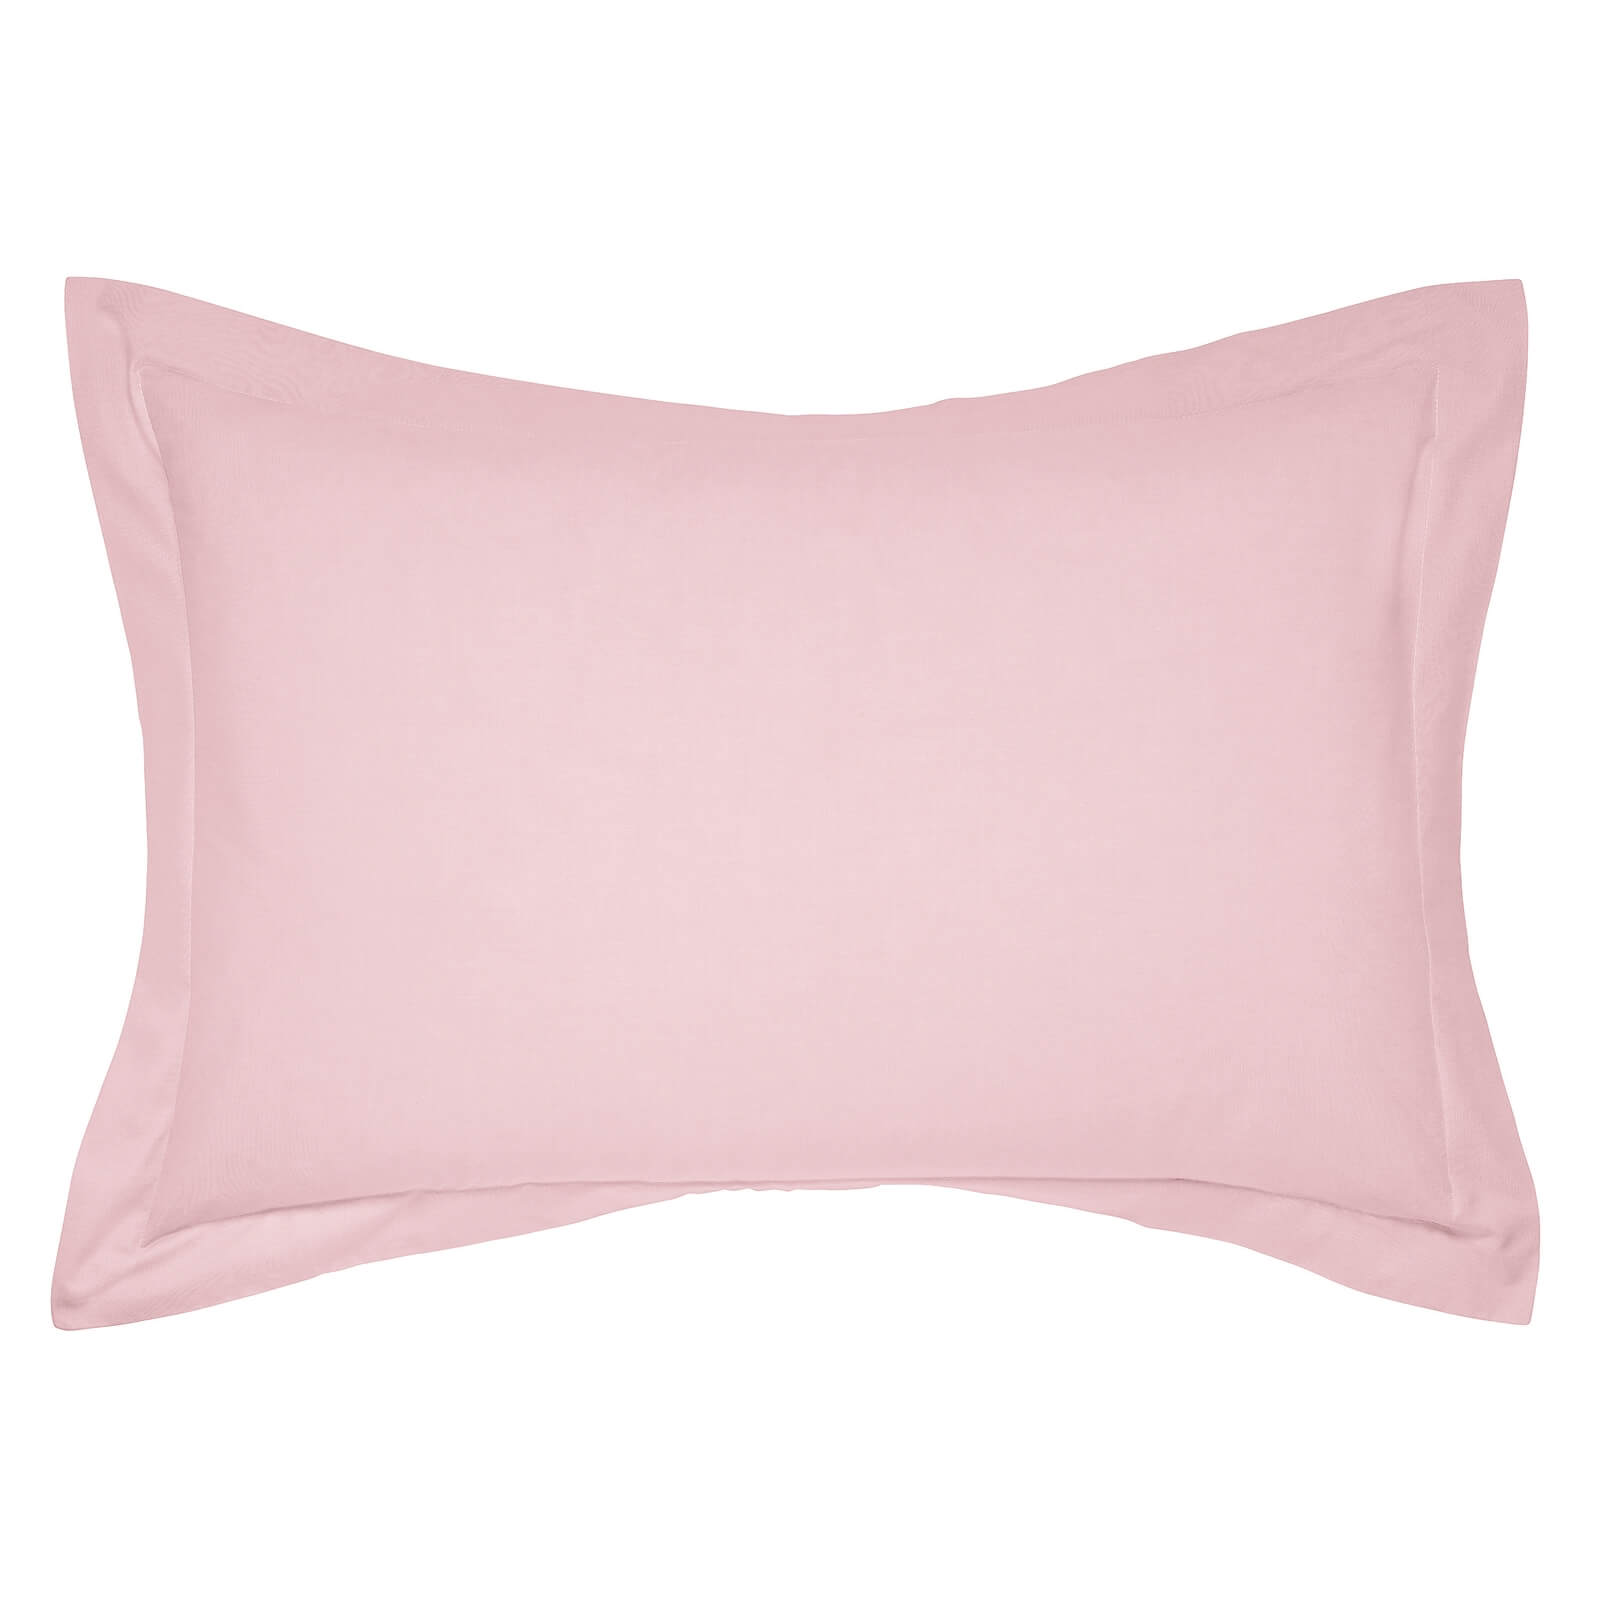 Helena Springfield Copenhagen Plain Dye Pillowcase Oxford - Blush